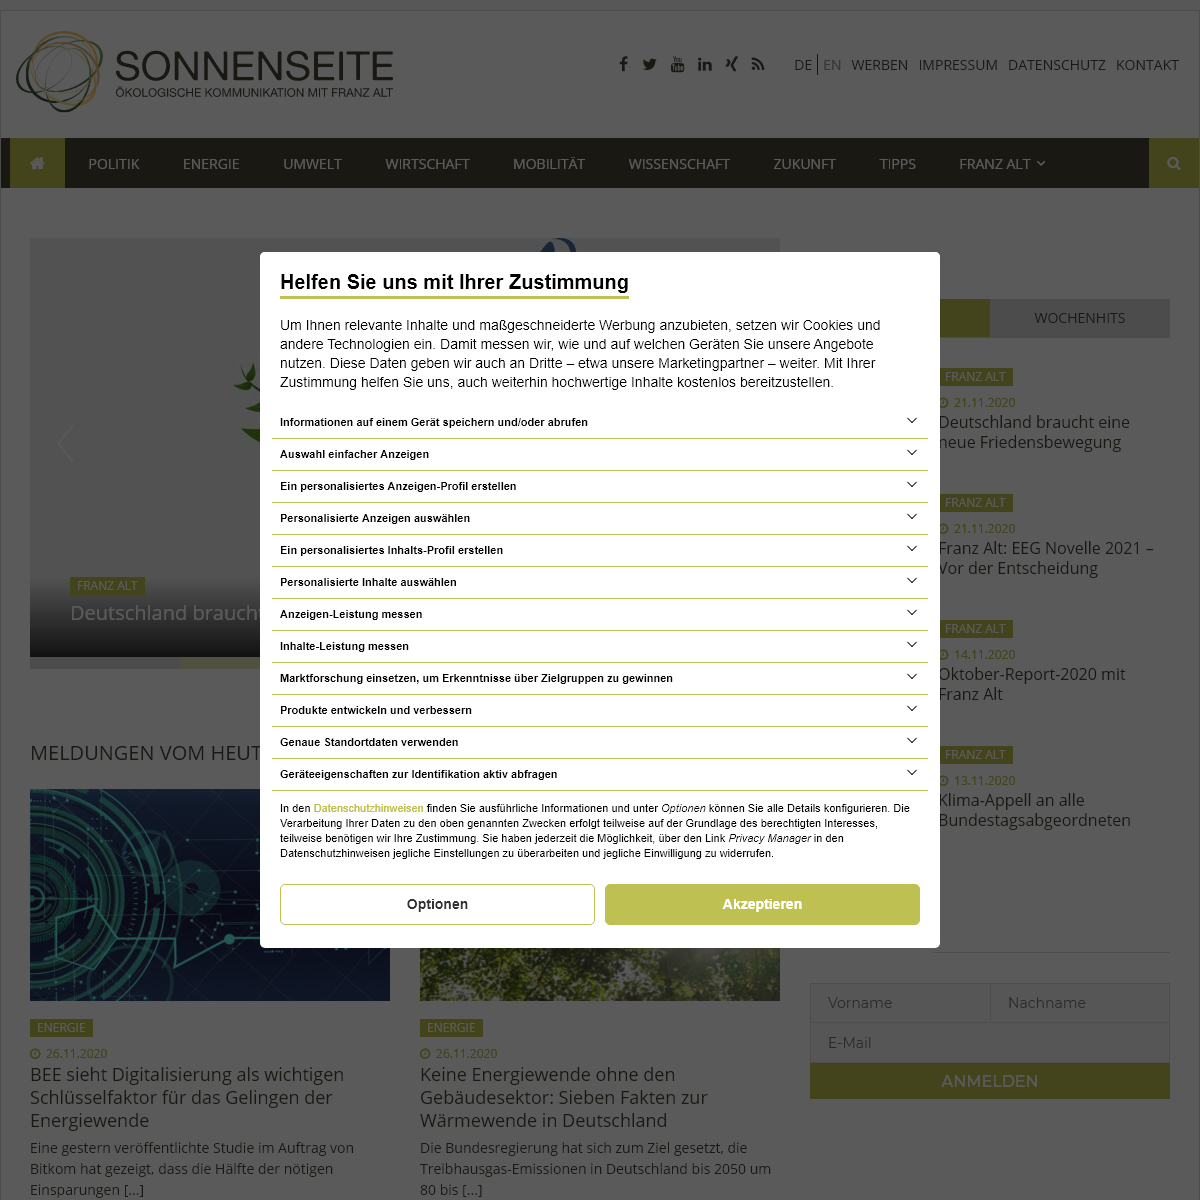 A complete backup of sonnenseite.com